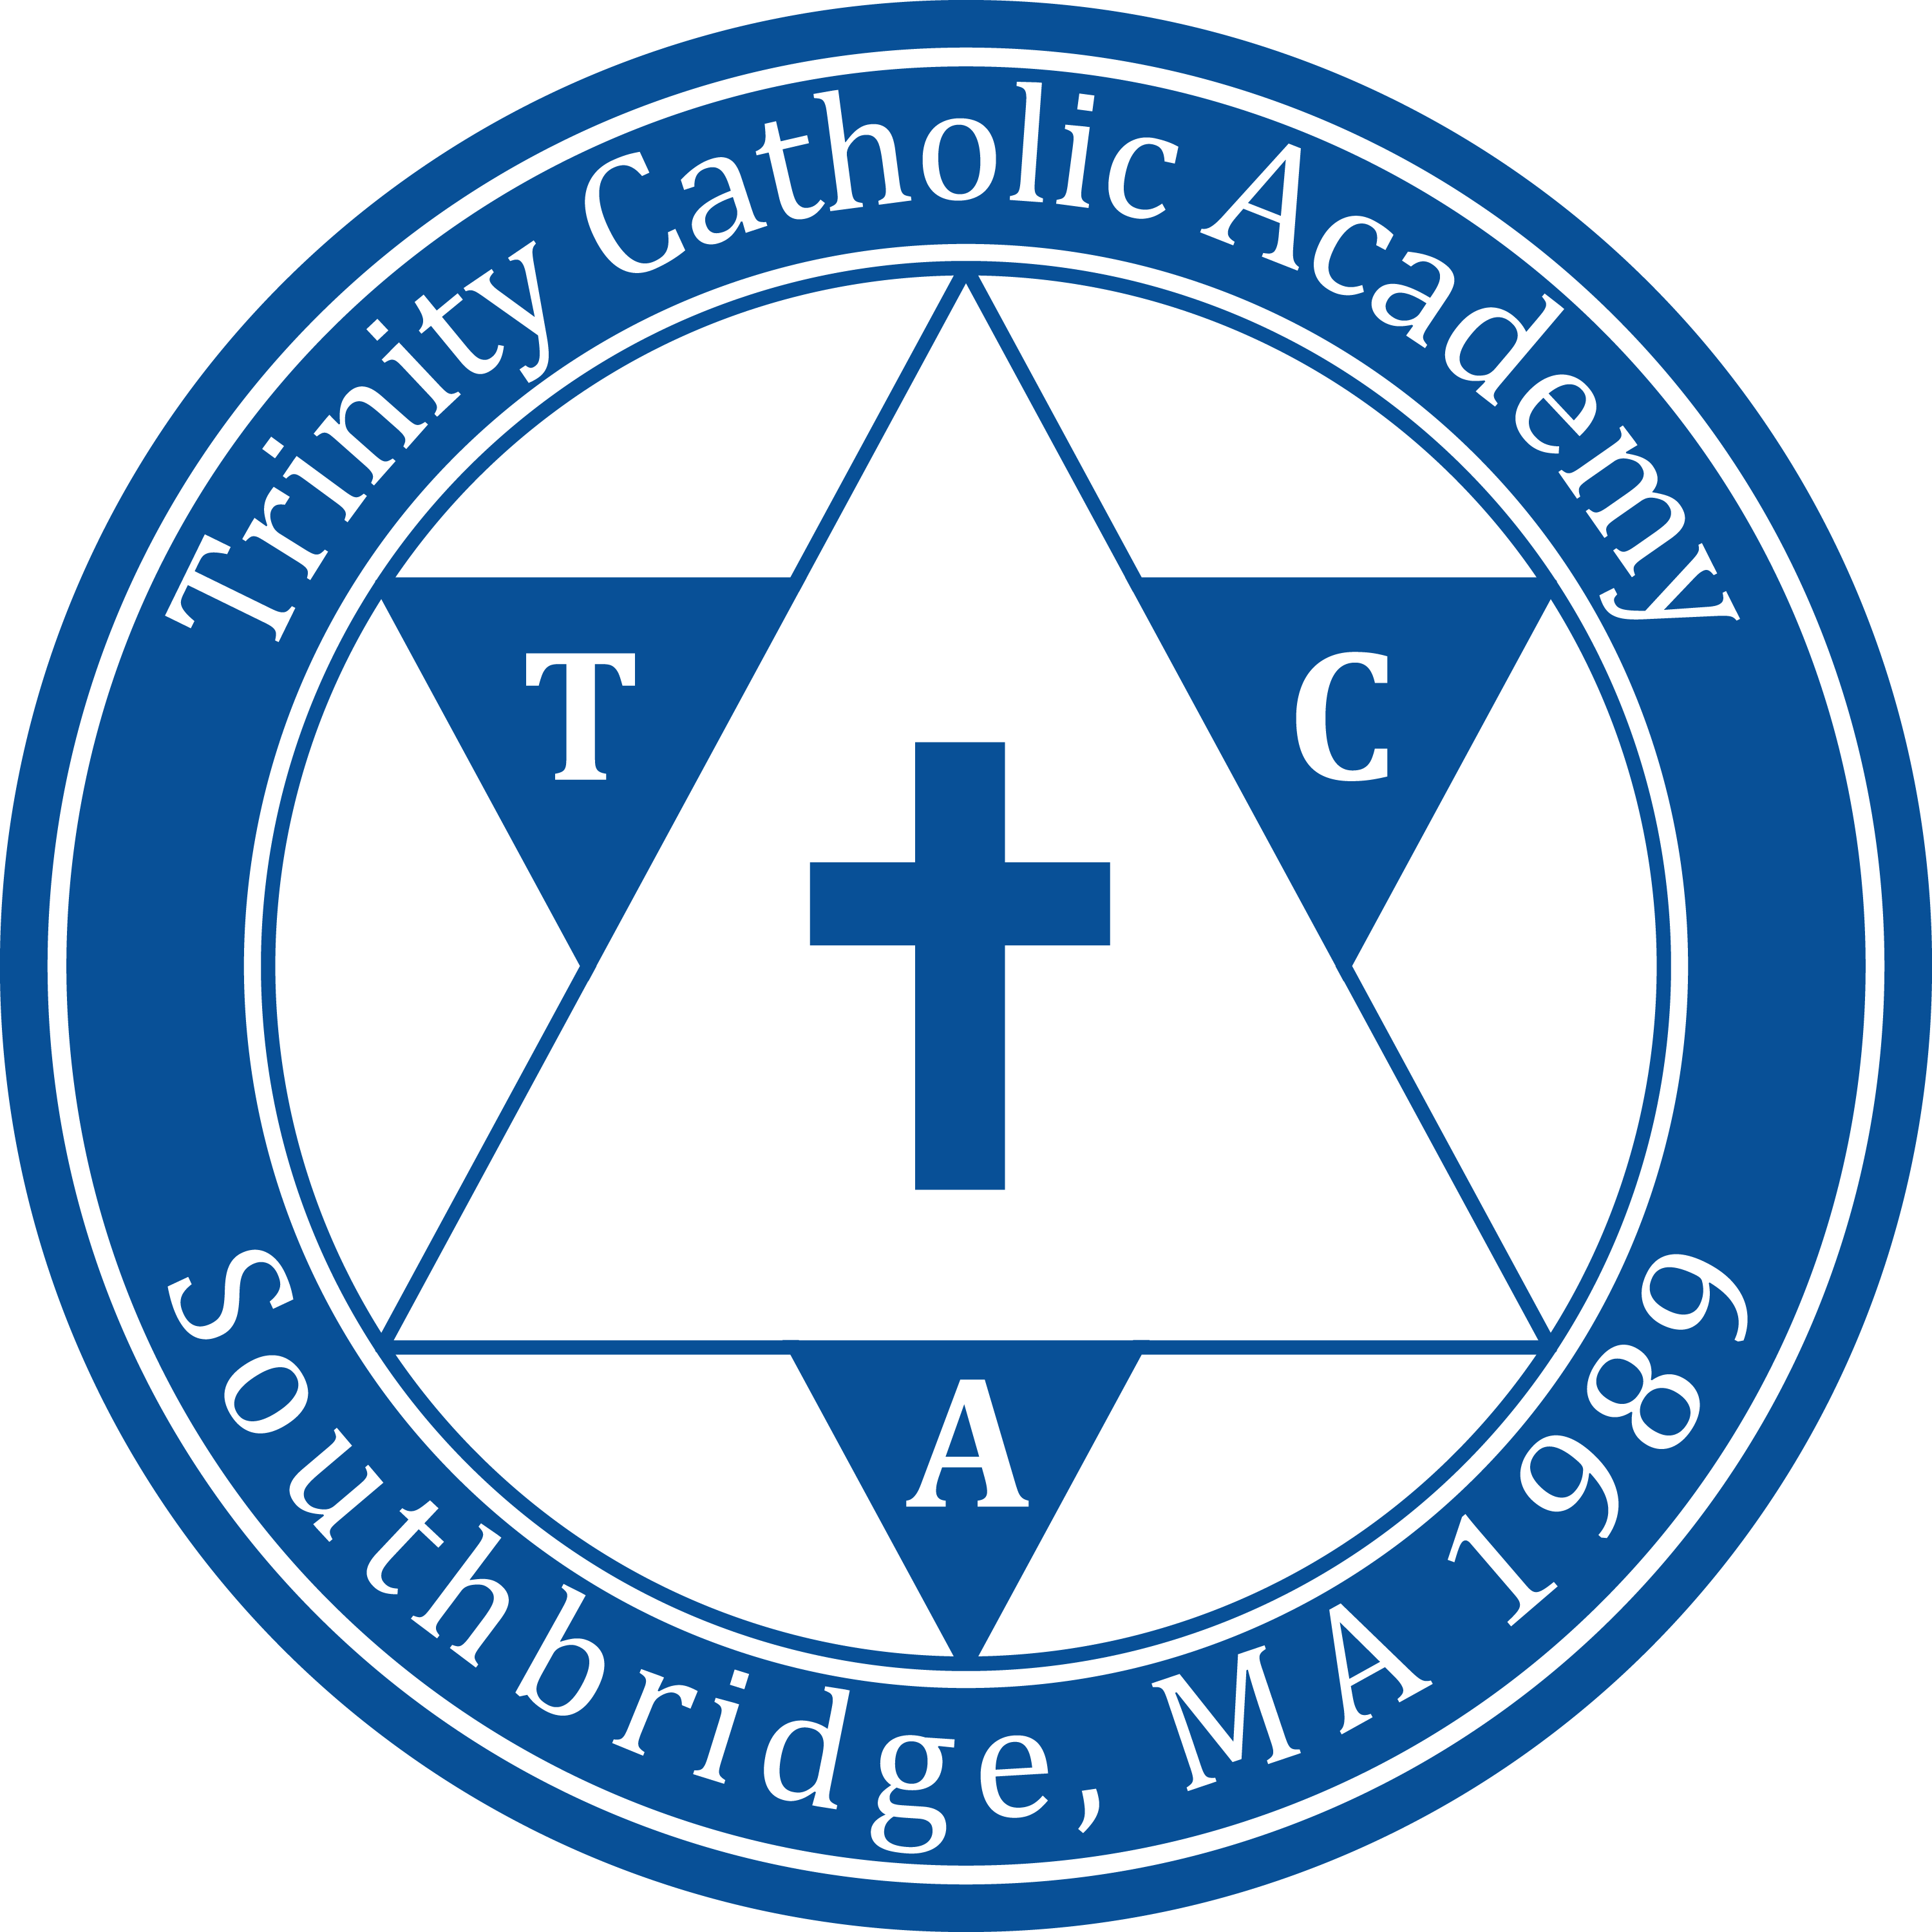 Trinity Catholic Academy